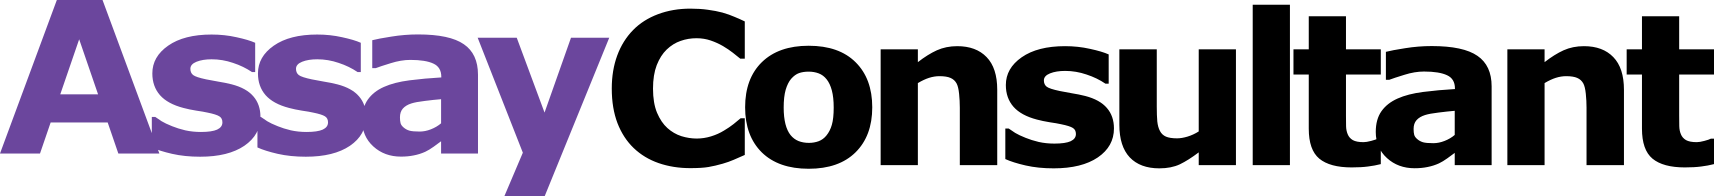 assayconsultant-logo